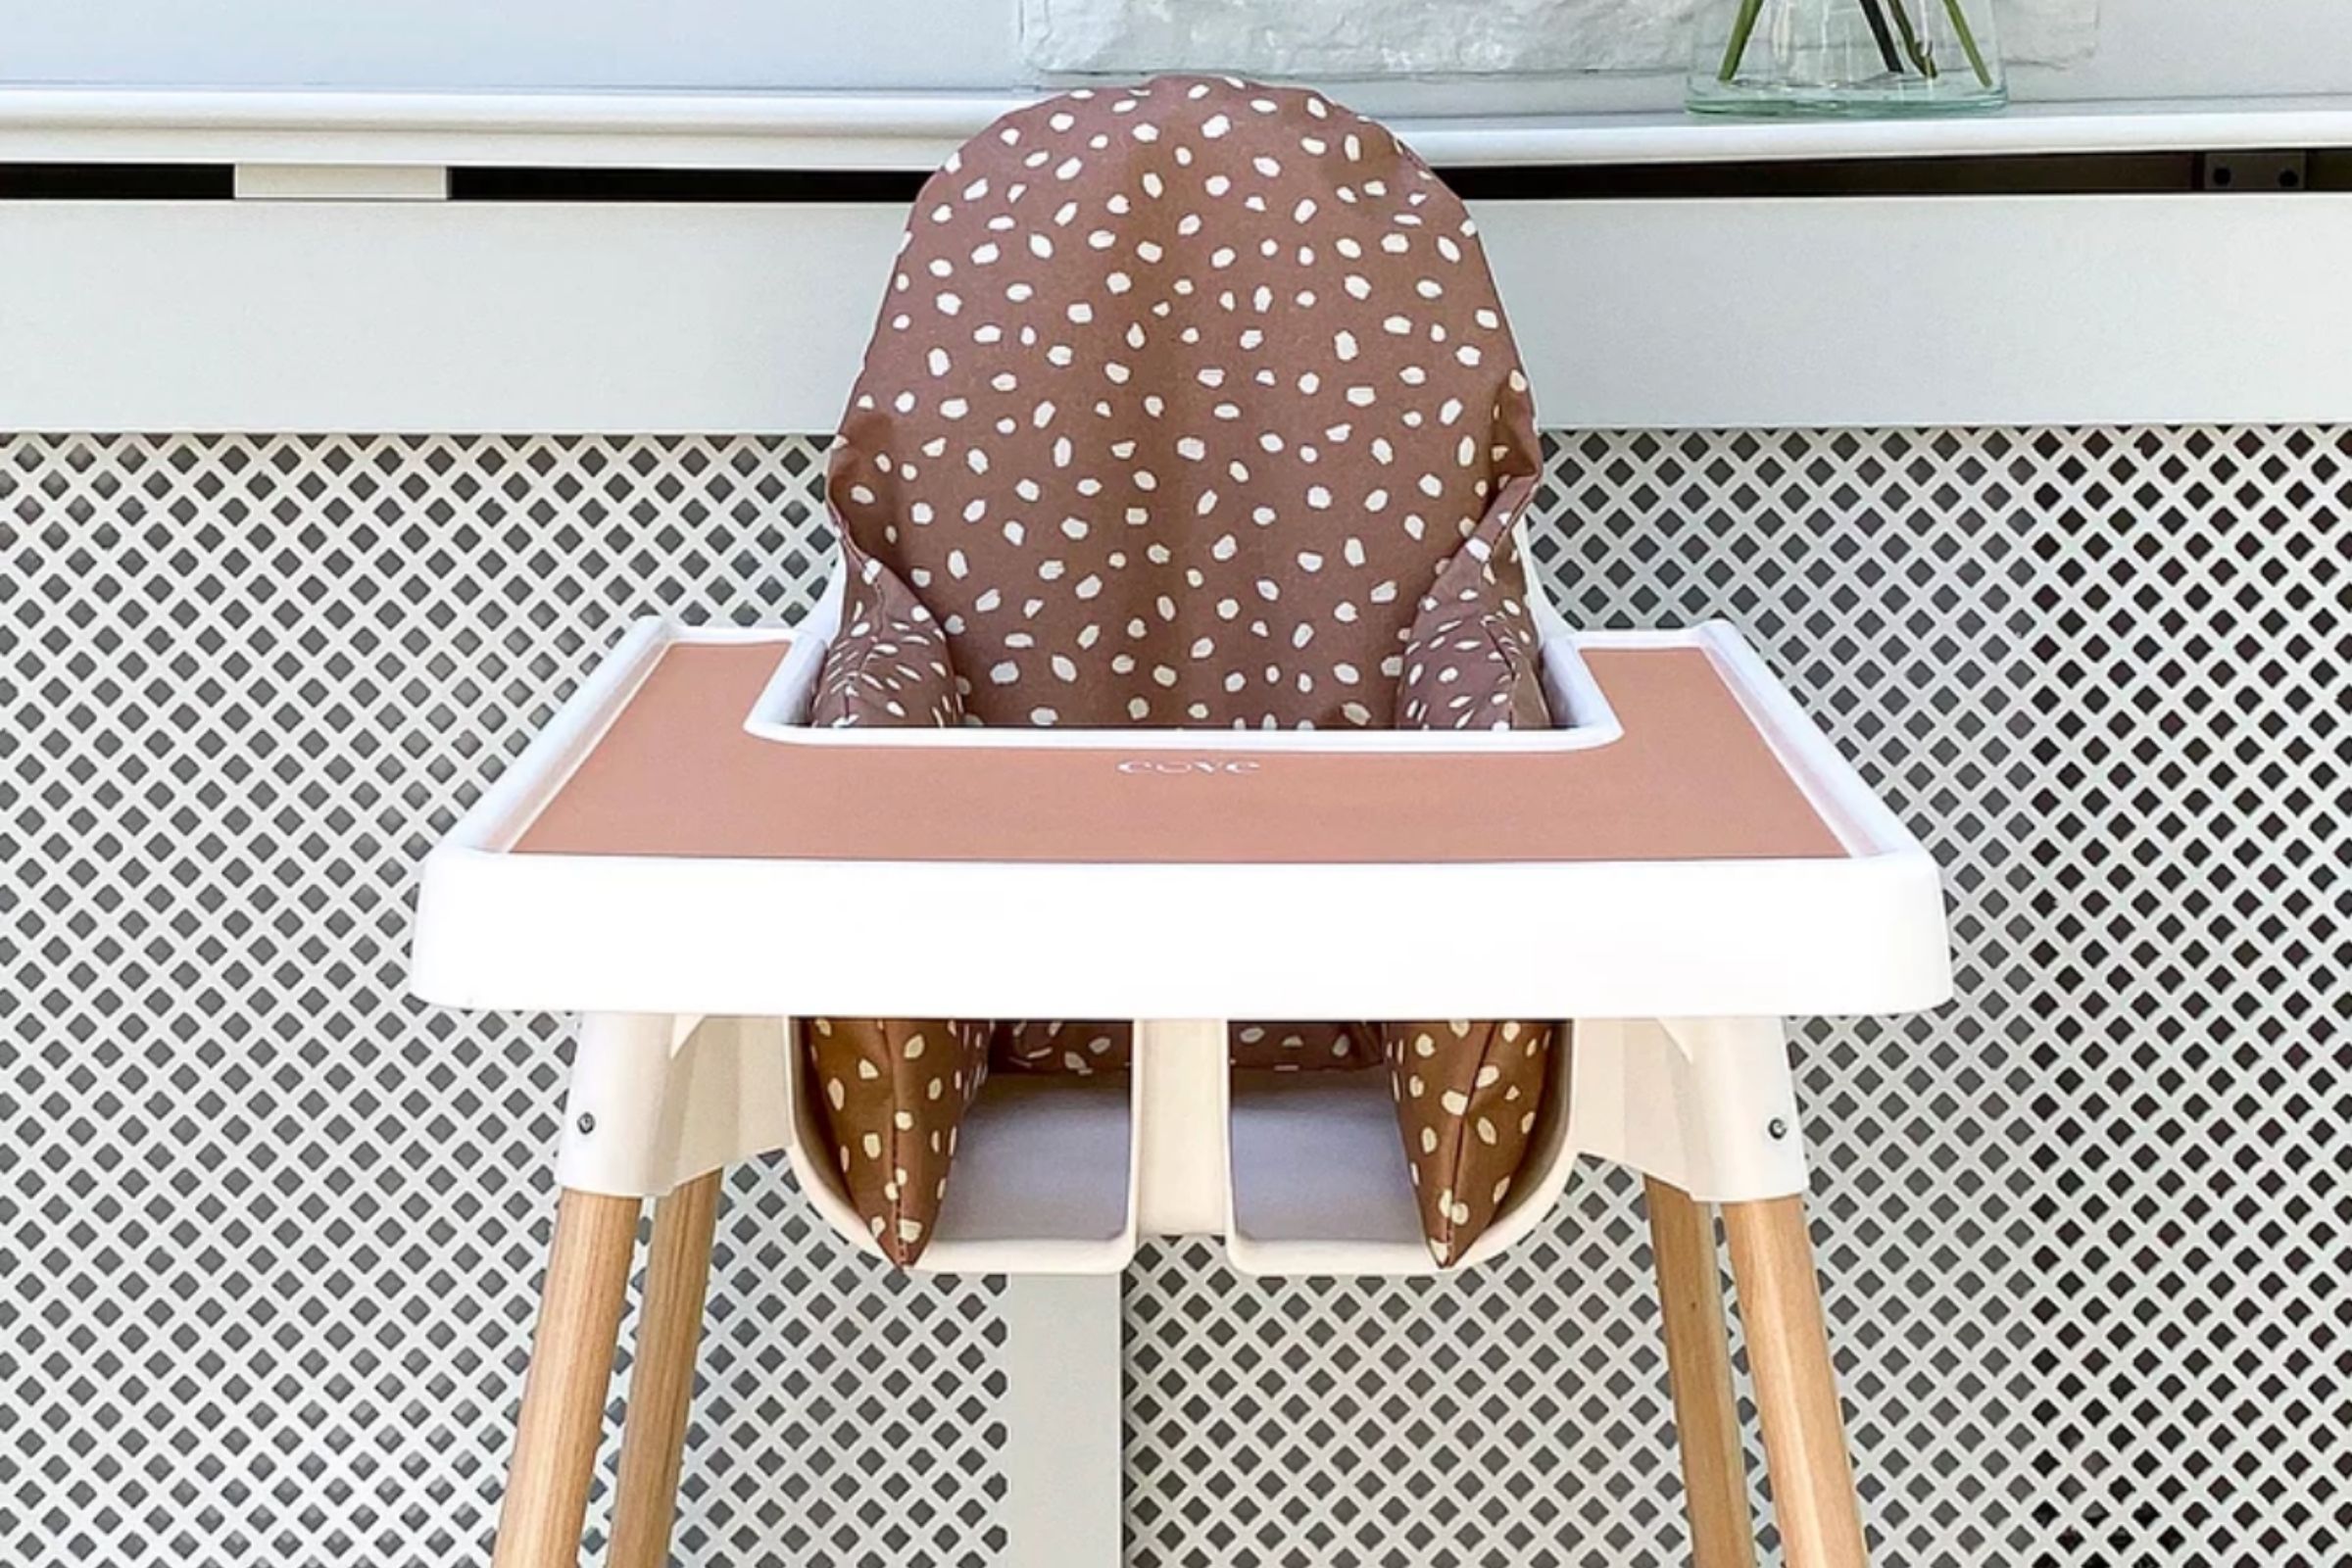 DIY IKEA High Chair Hacks - BLW Antilop High Chair for Baby